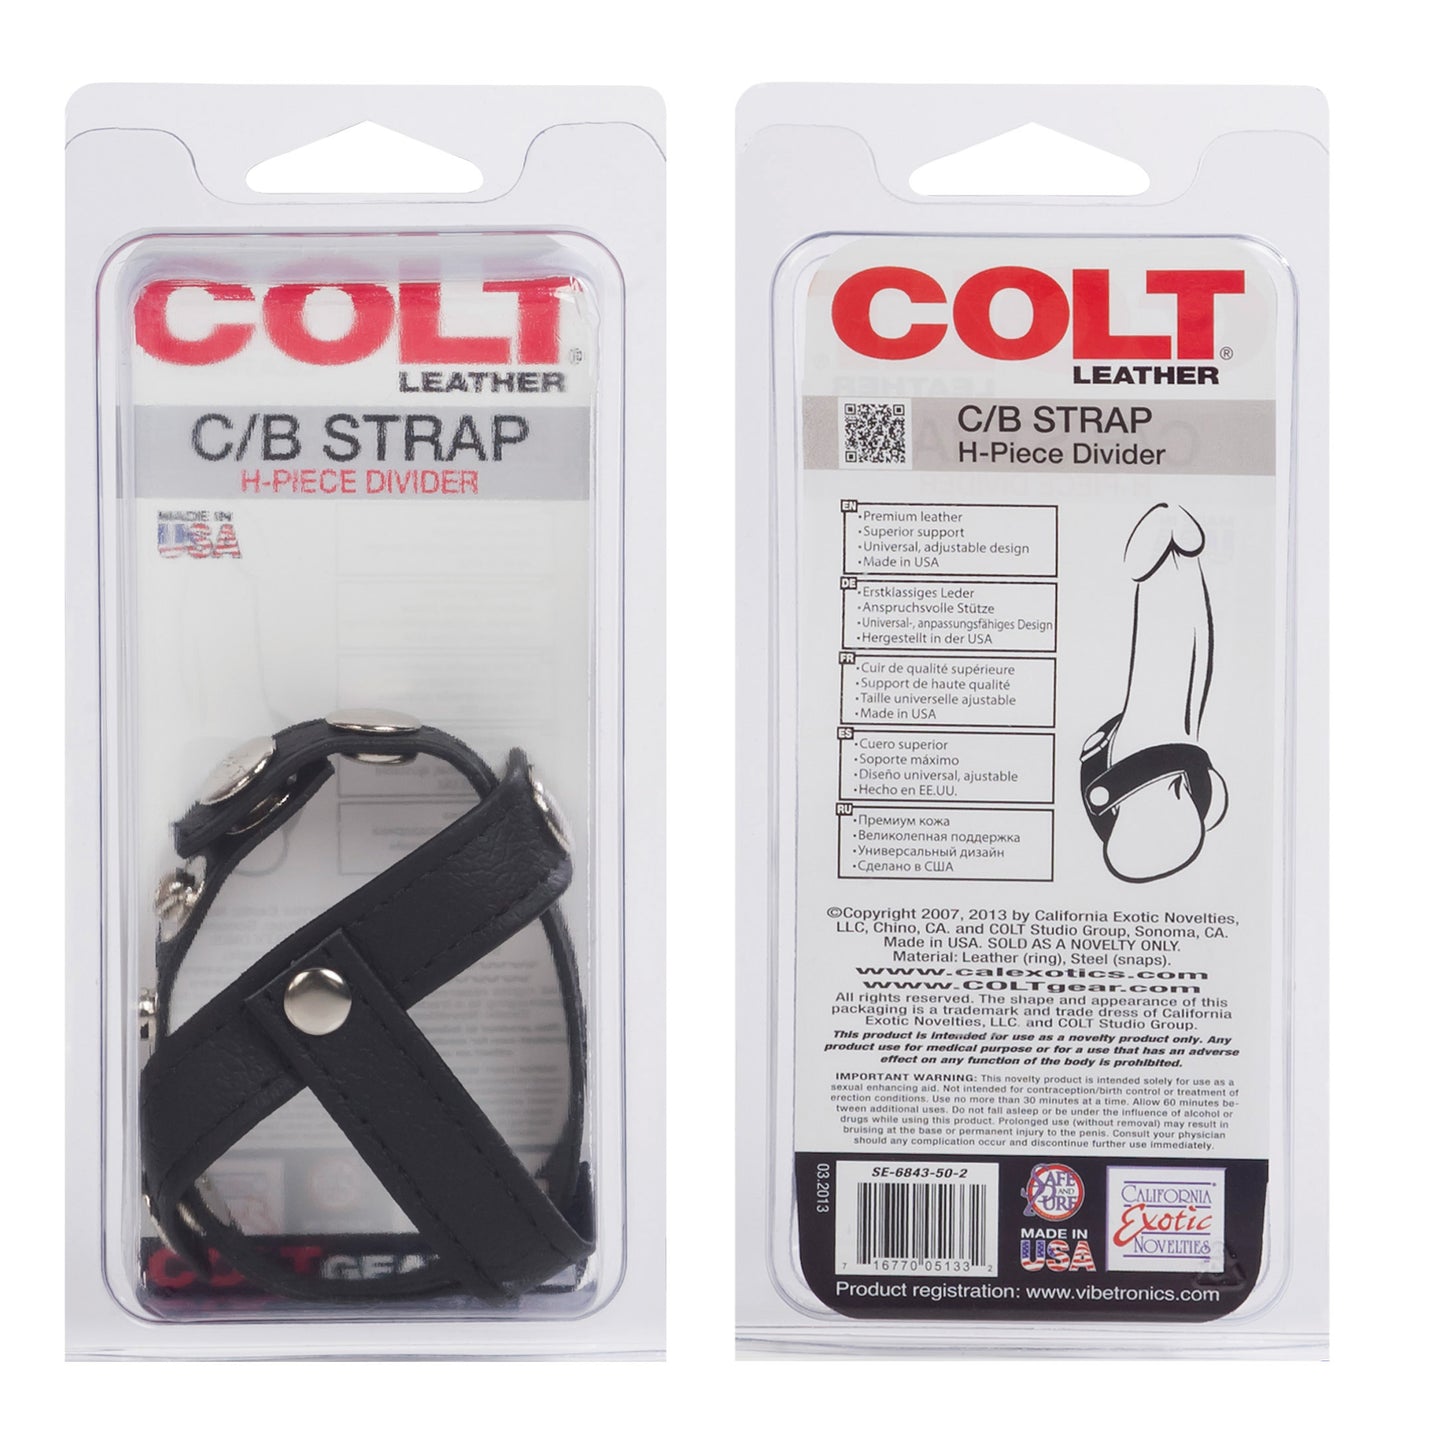 Colt Leather C-b Strap H-Piece Divider